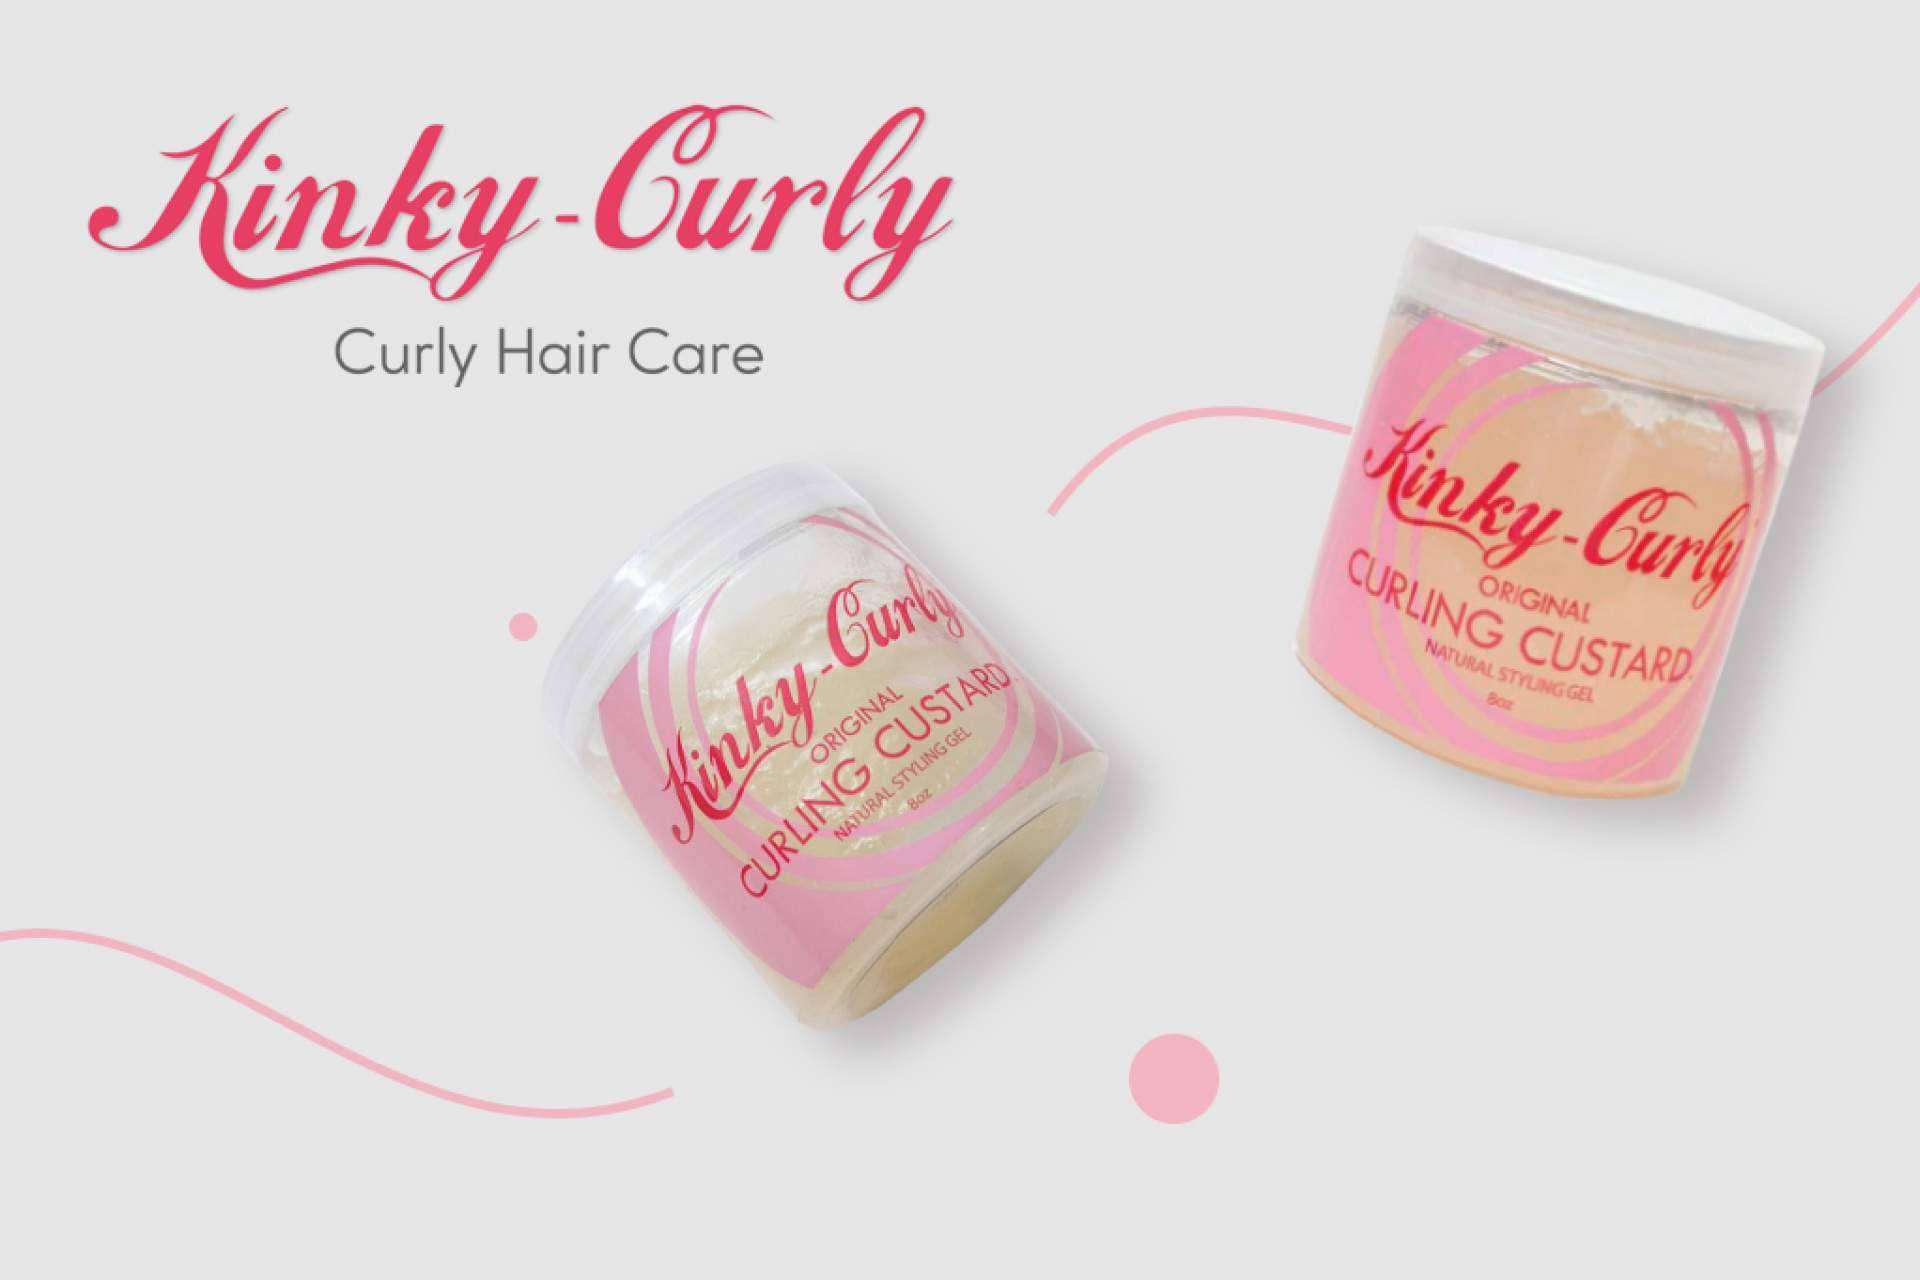 El Curling Custard Gel de la marca Kinky-Curly